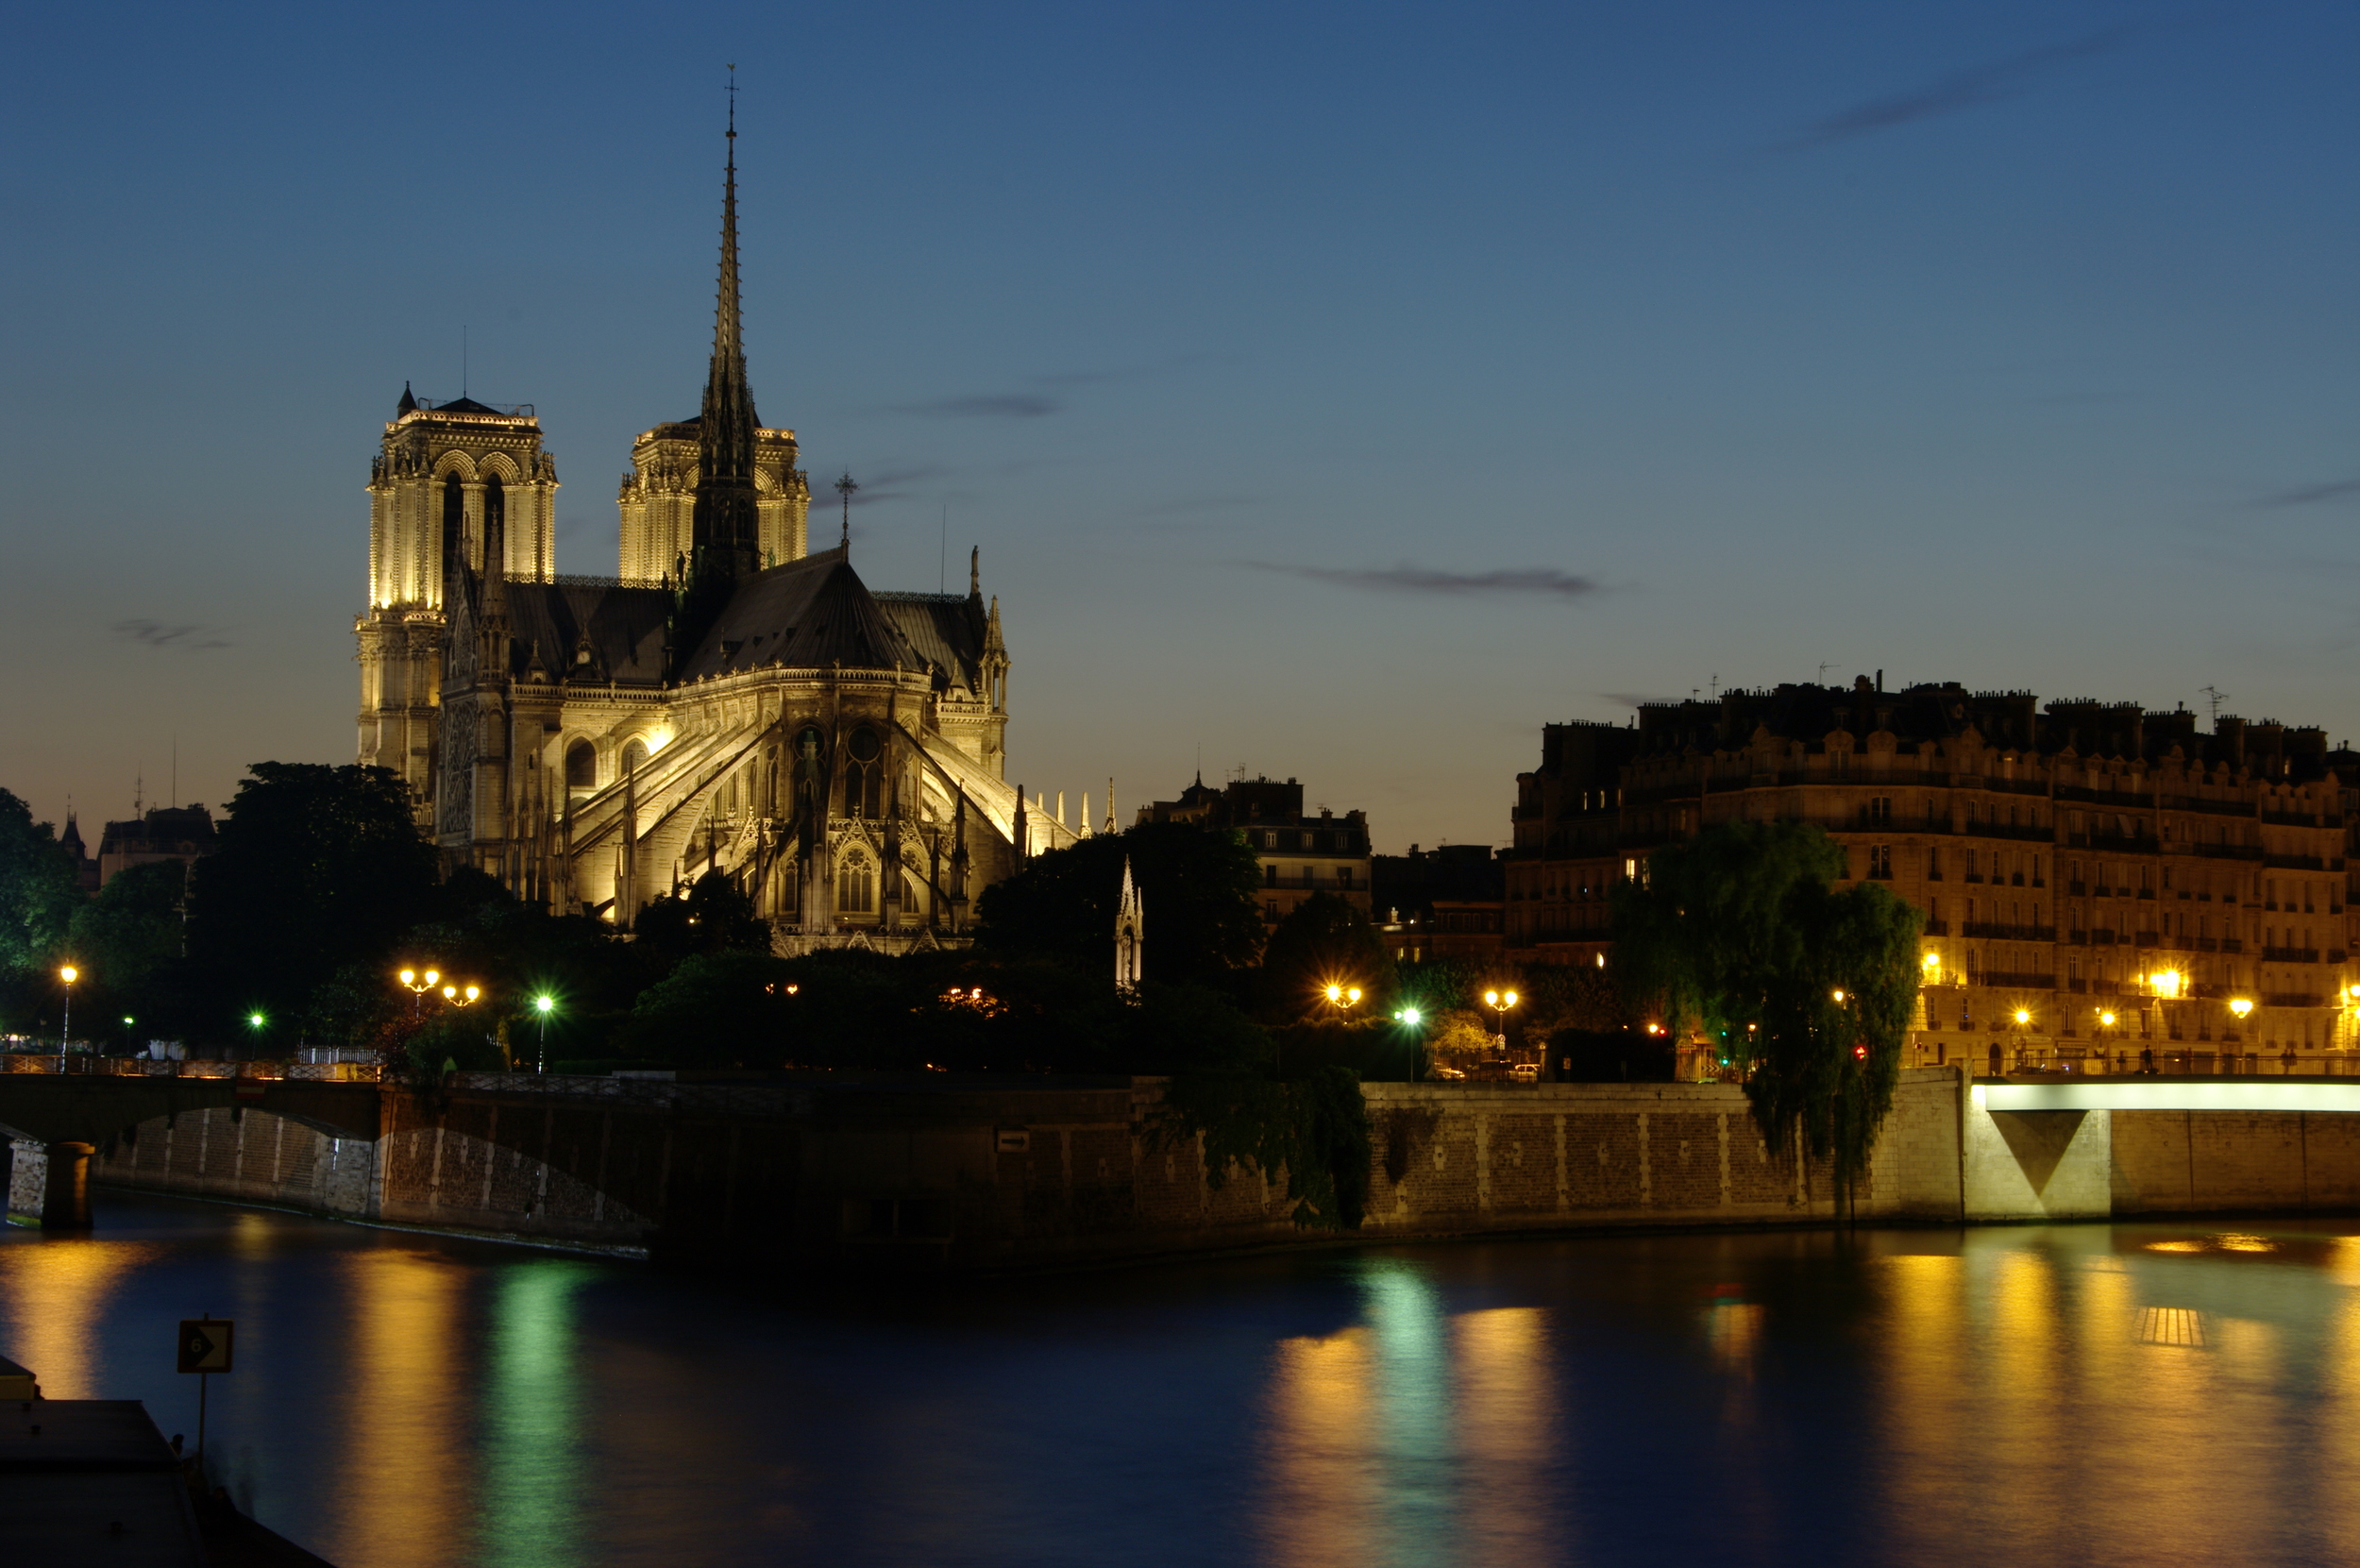  Notre Dame Catholic Cathedral at night, Paris 